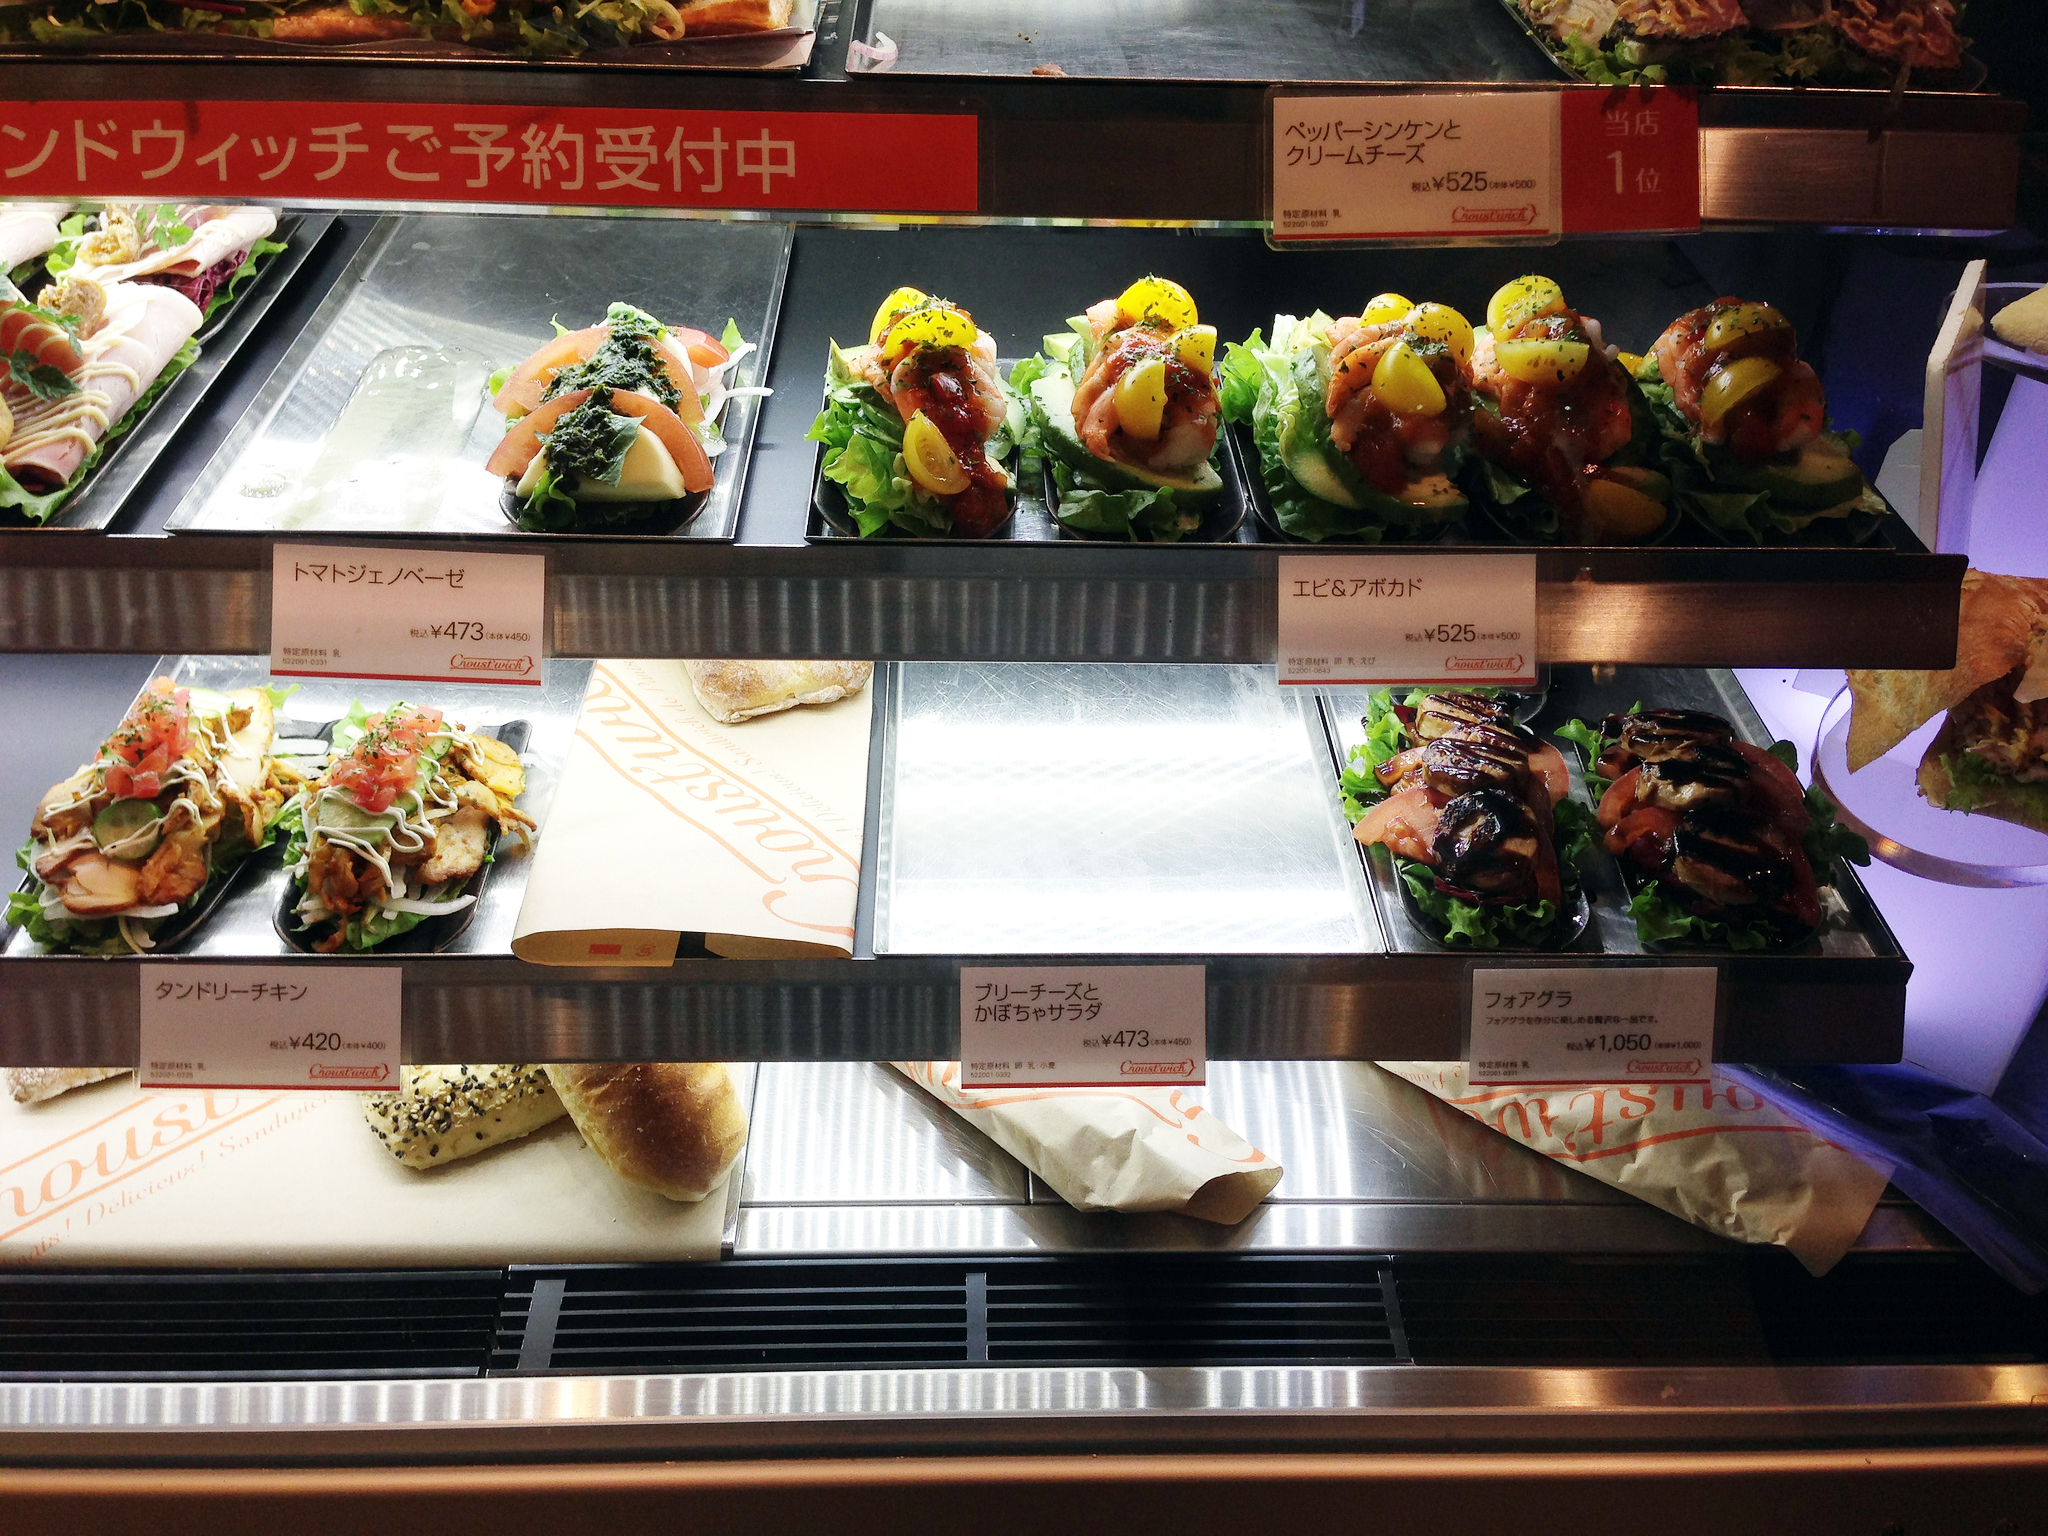 Mitsukoshi Department Store food hall in Tokyo.